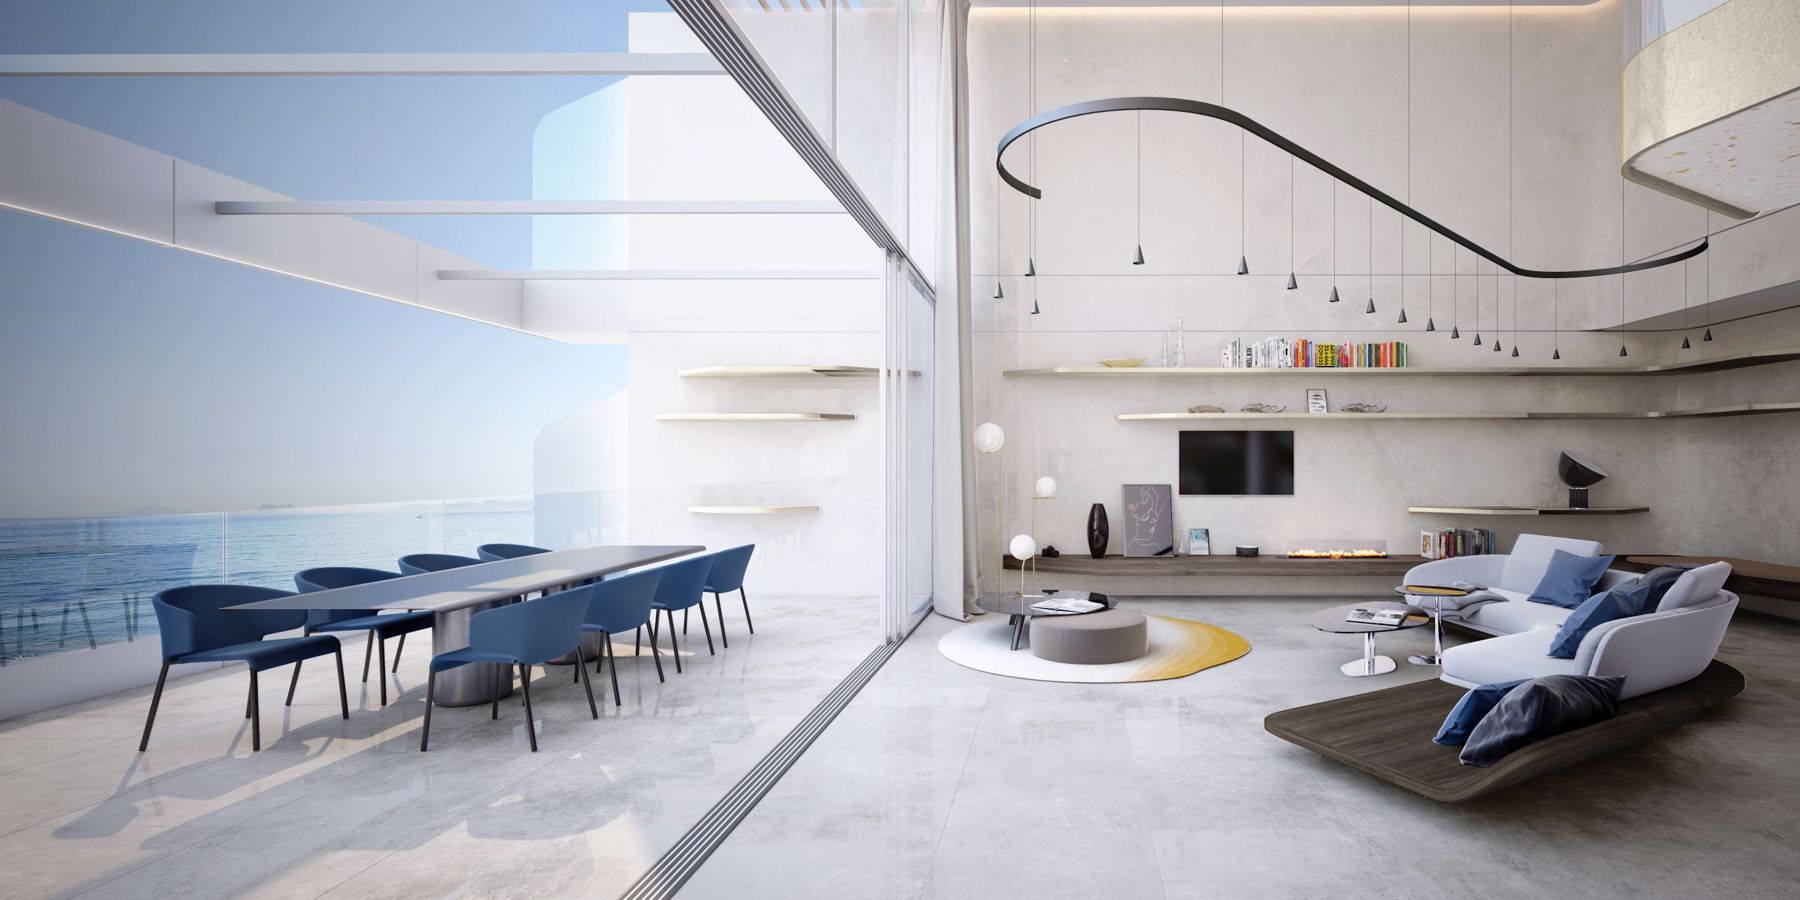 Luxury residential complex designed by Pininfarina for Estepona, Costa del Sol.